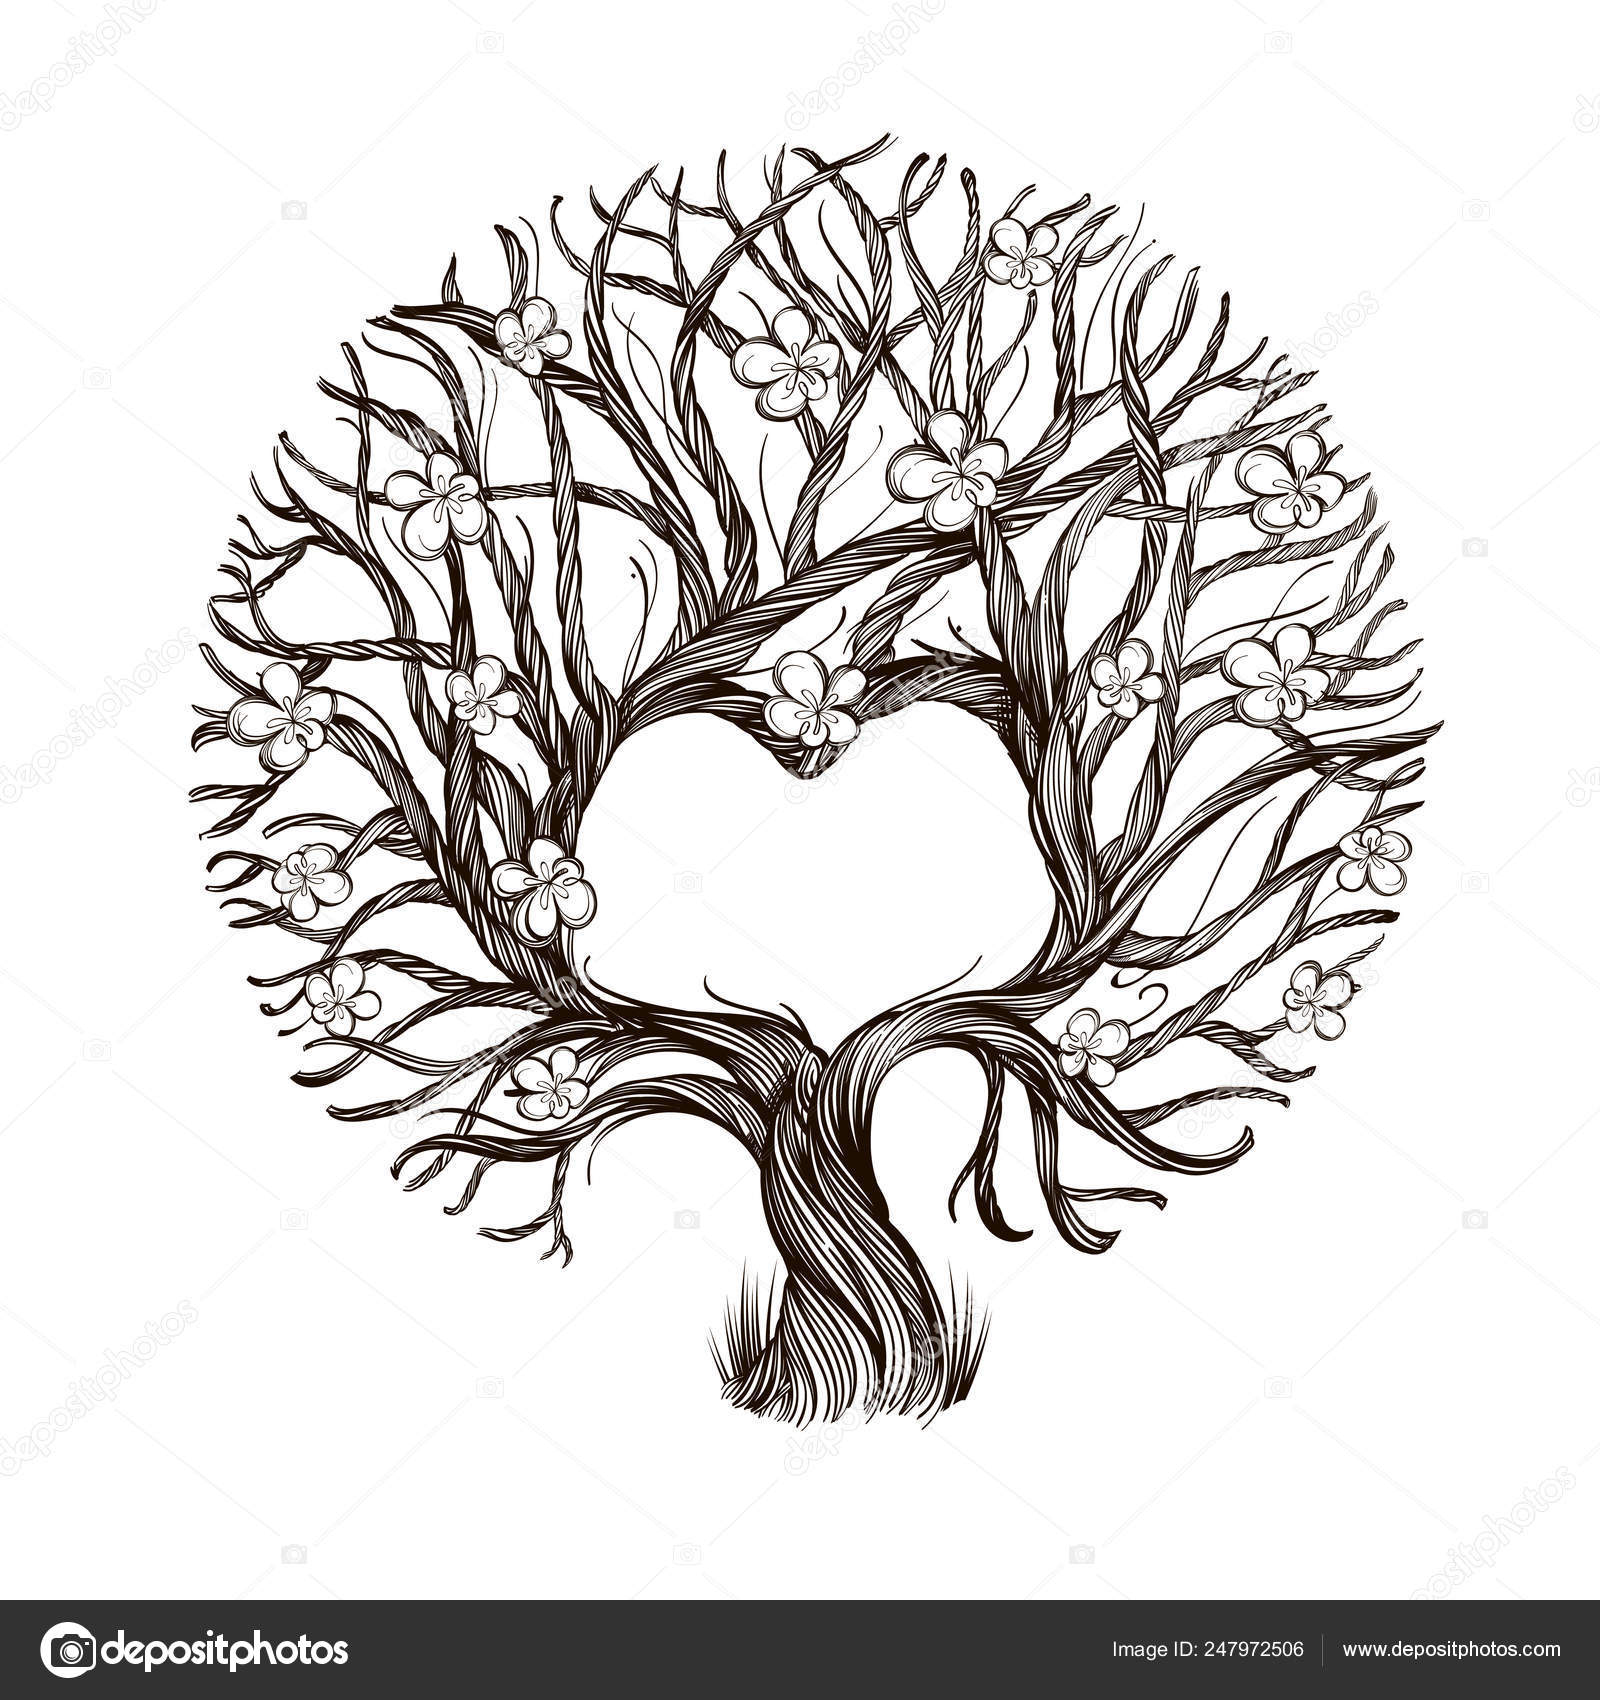 love tree vector black